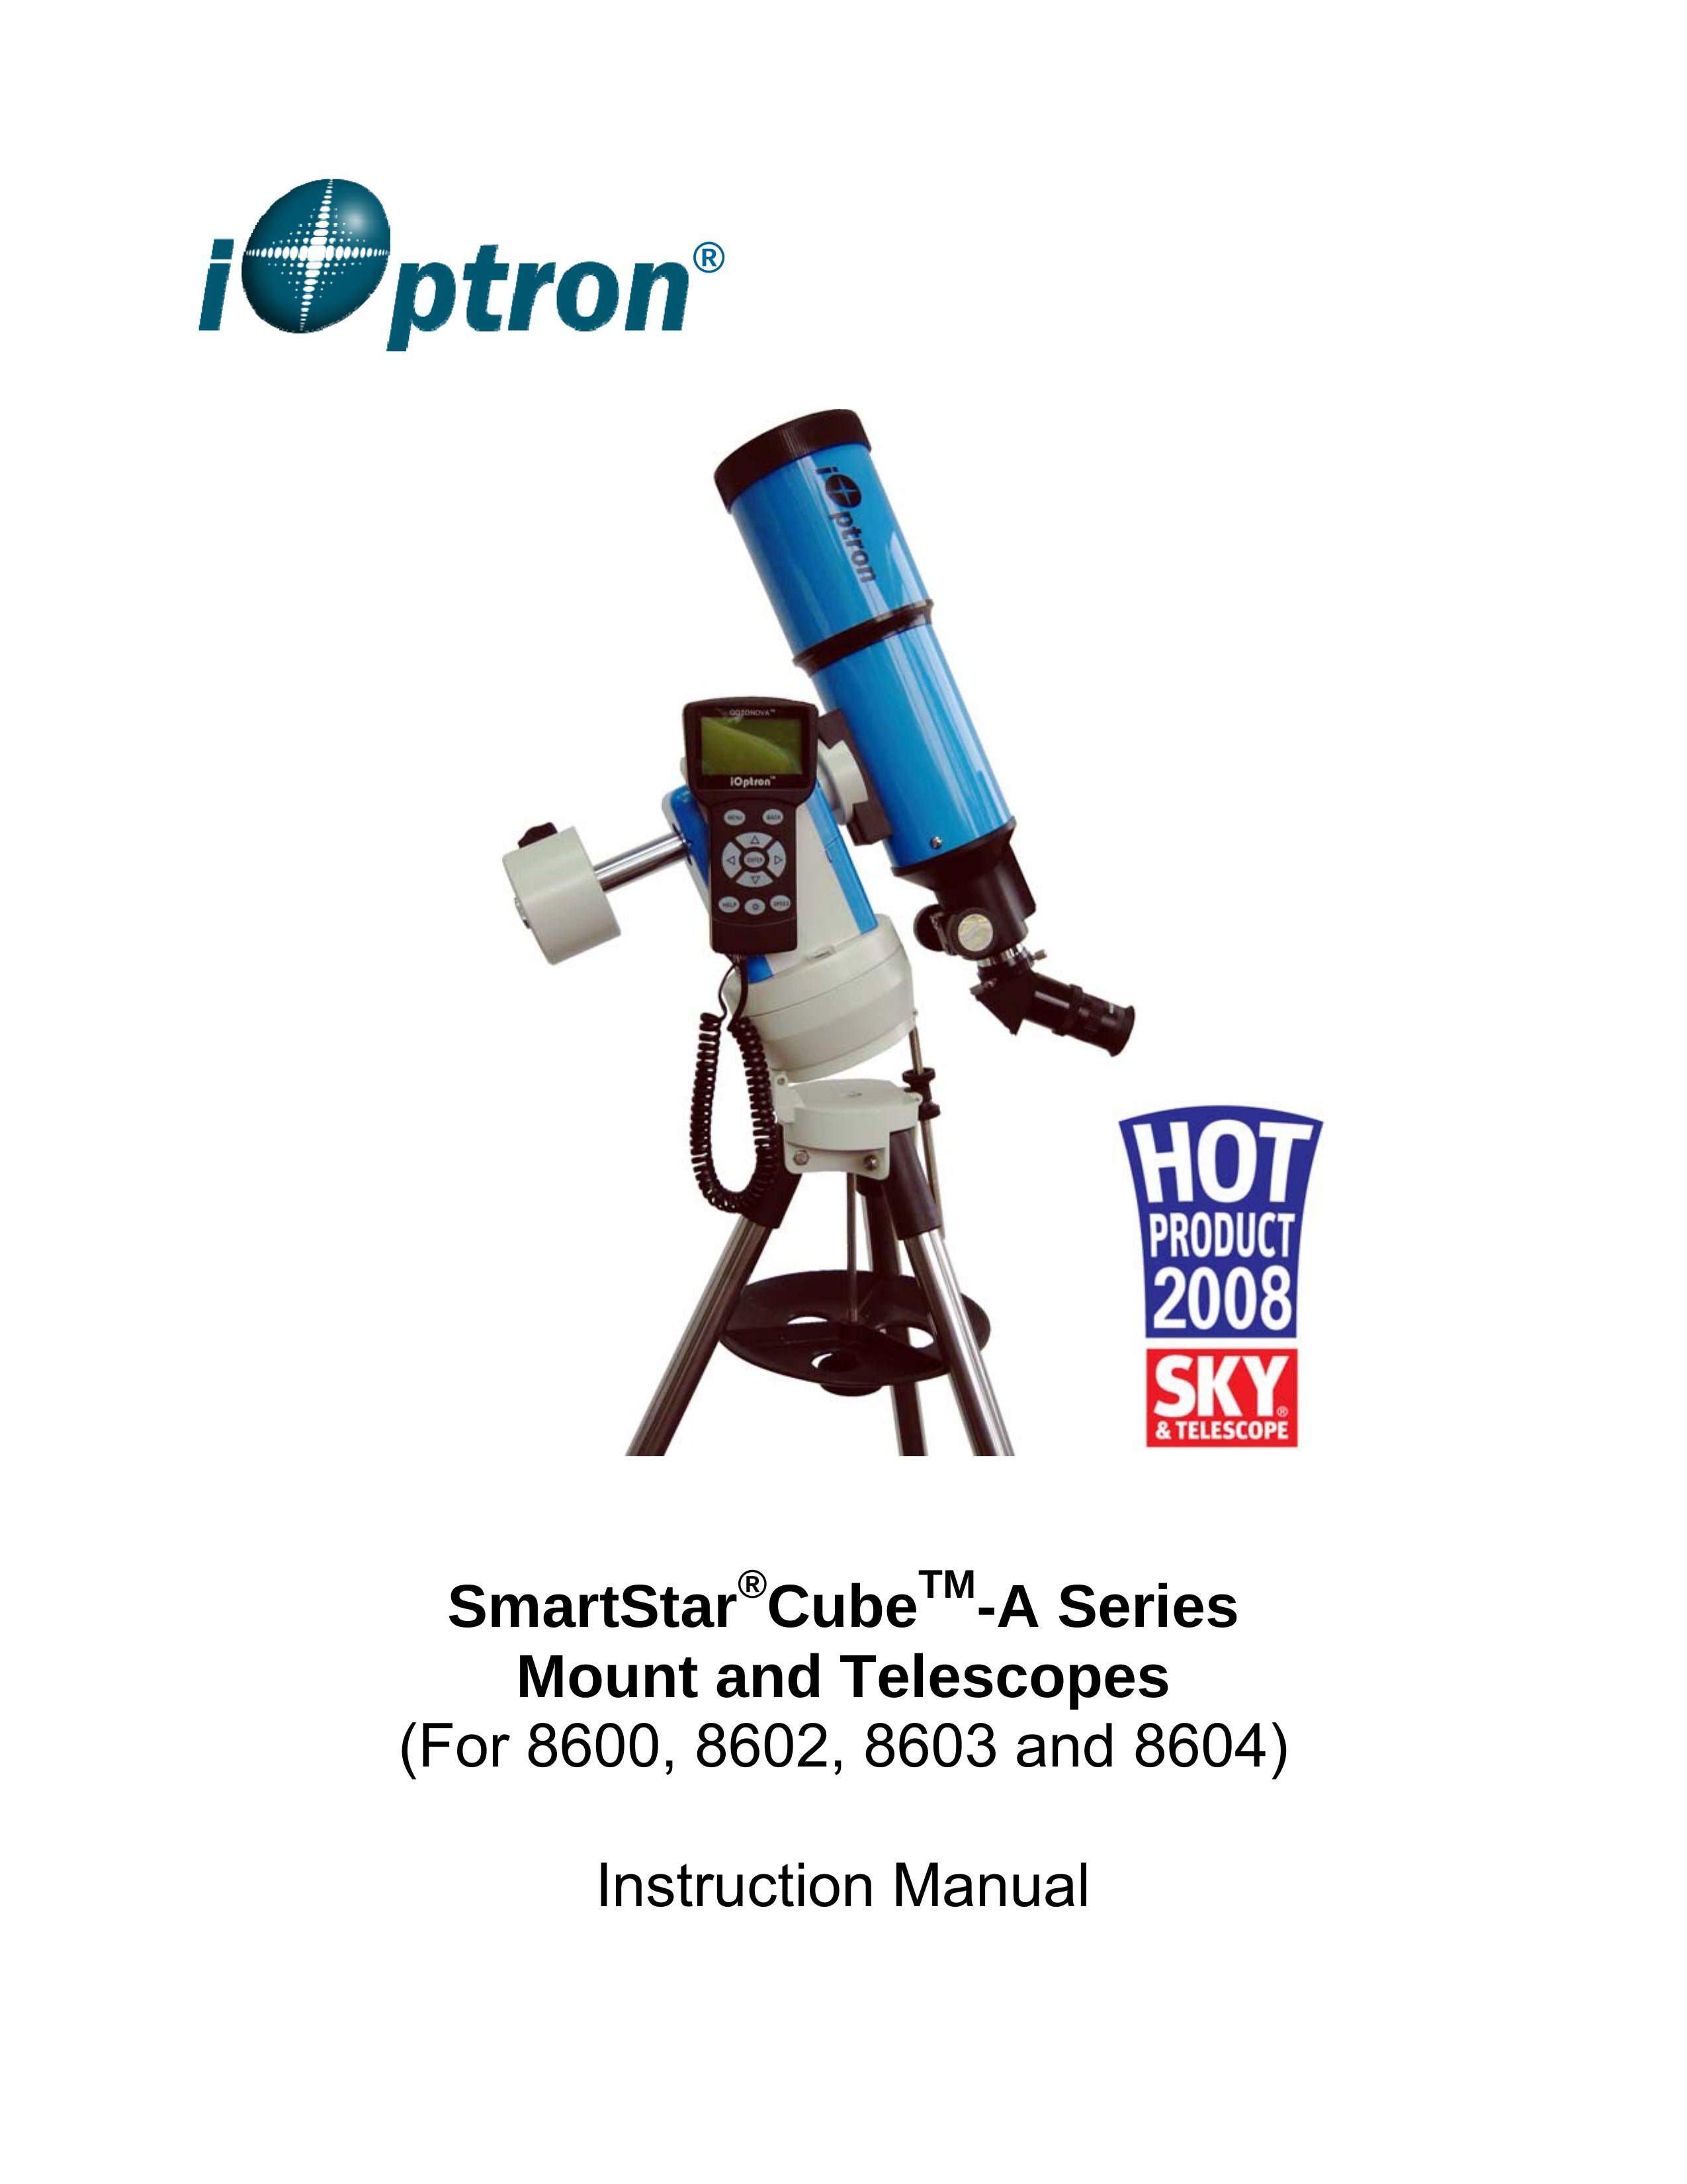 iOptron 8603 and 8604 Telescope User Manual